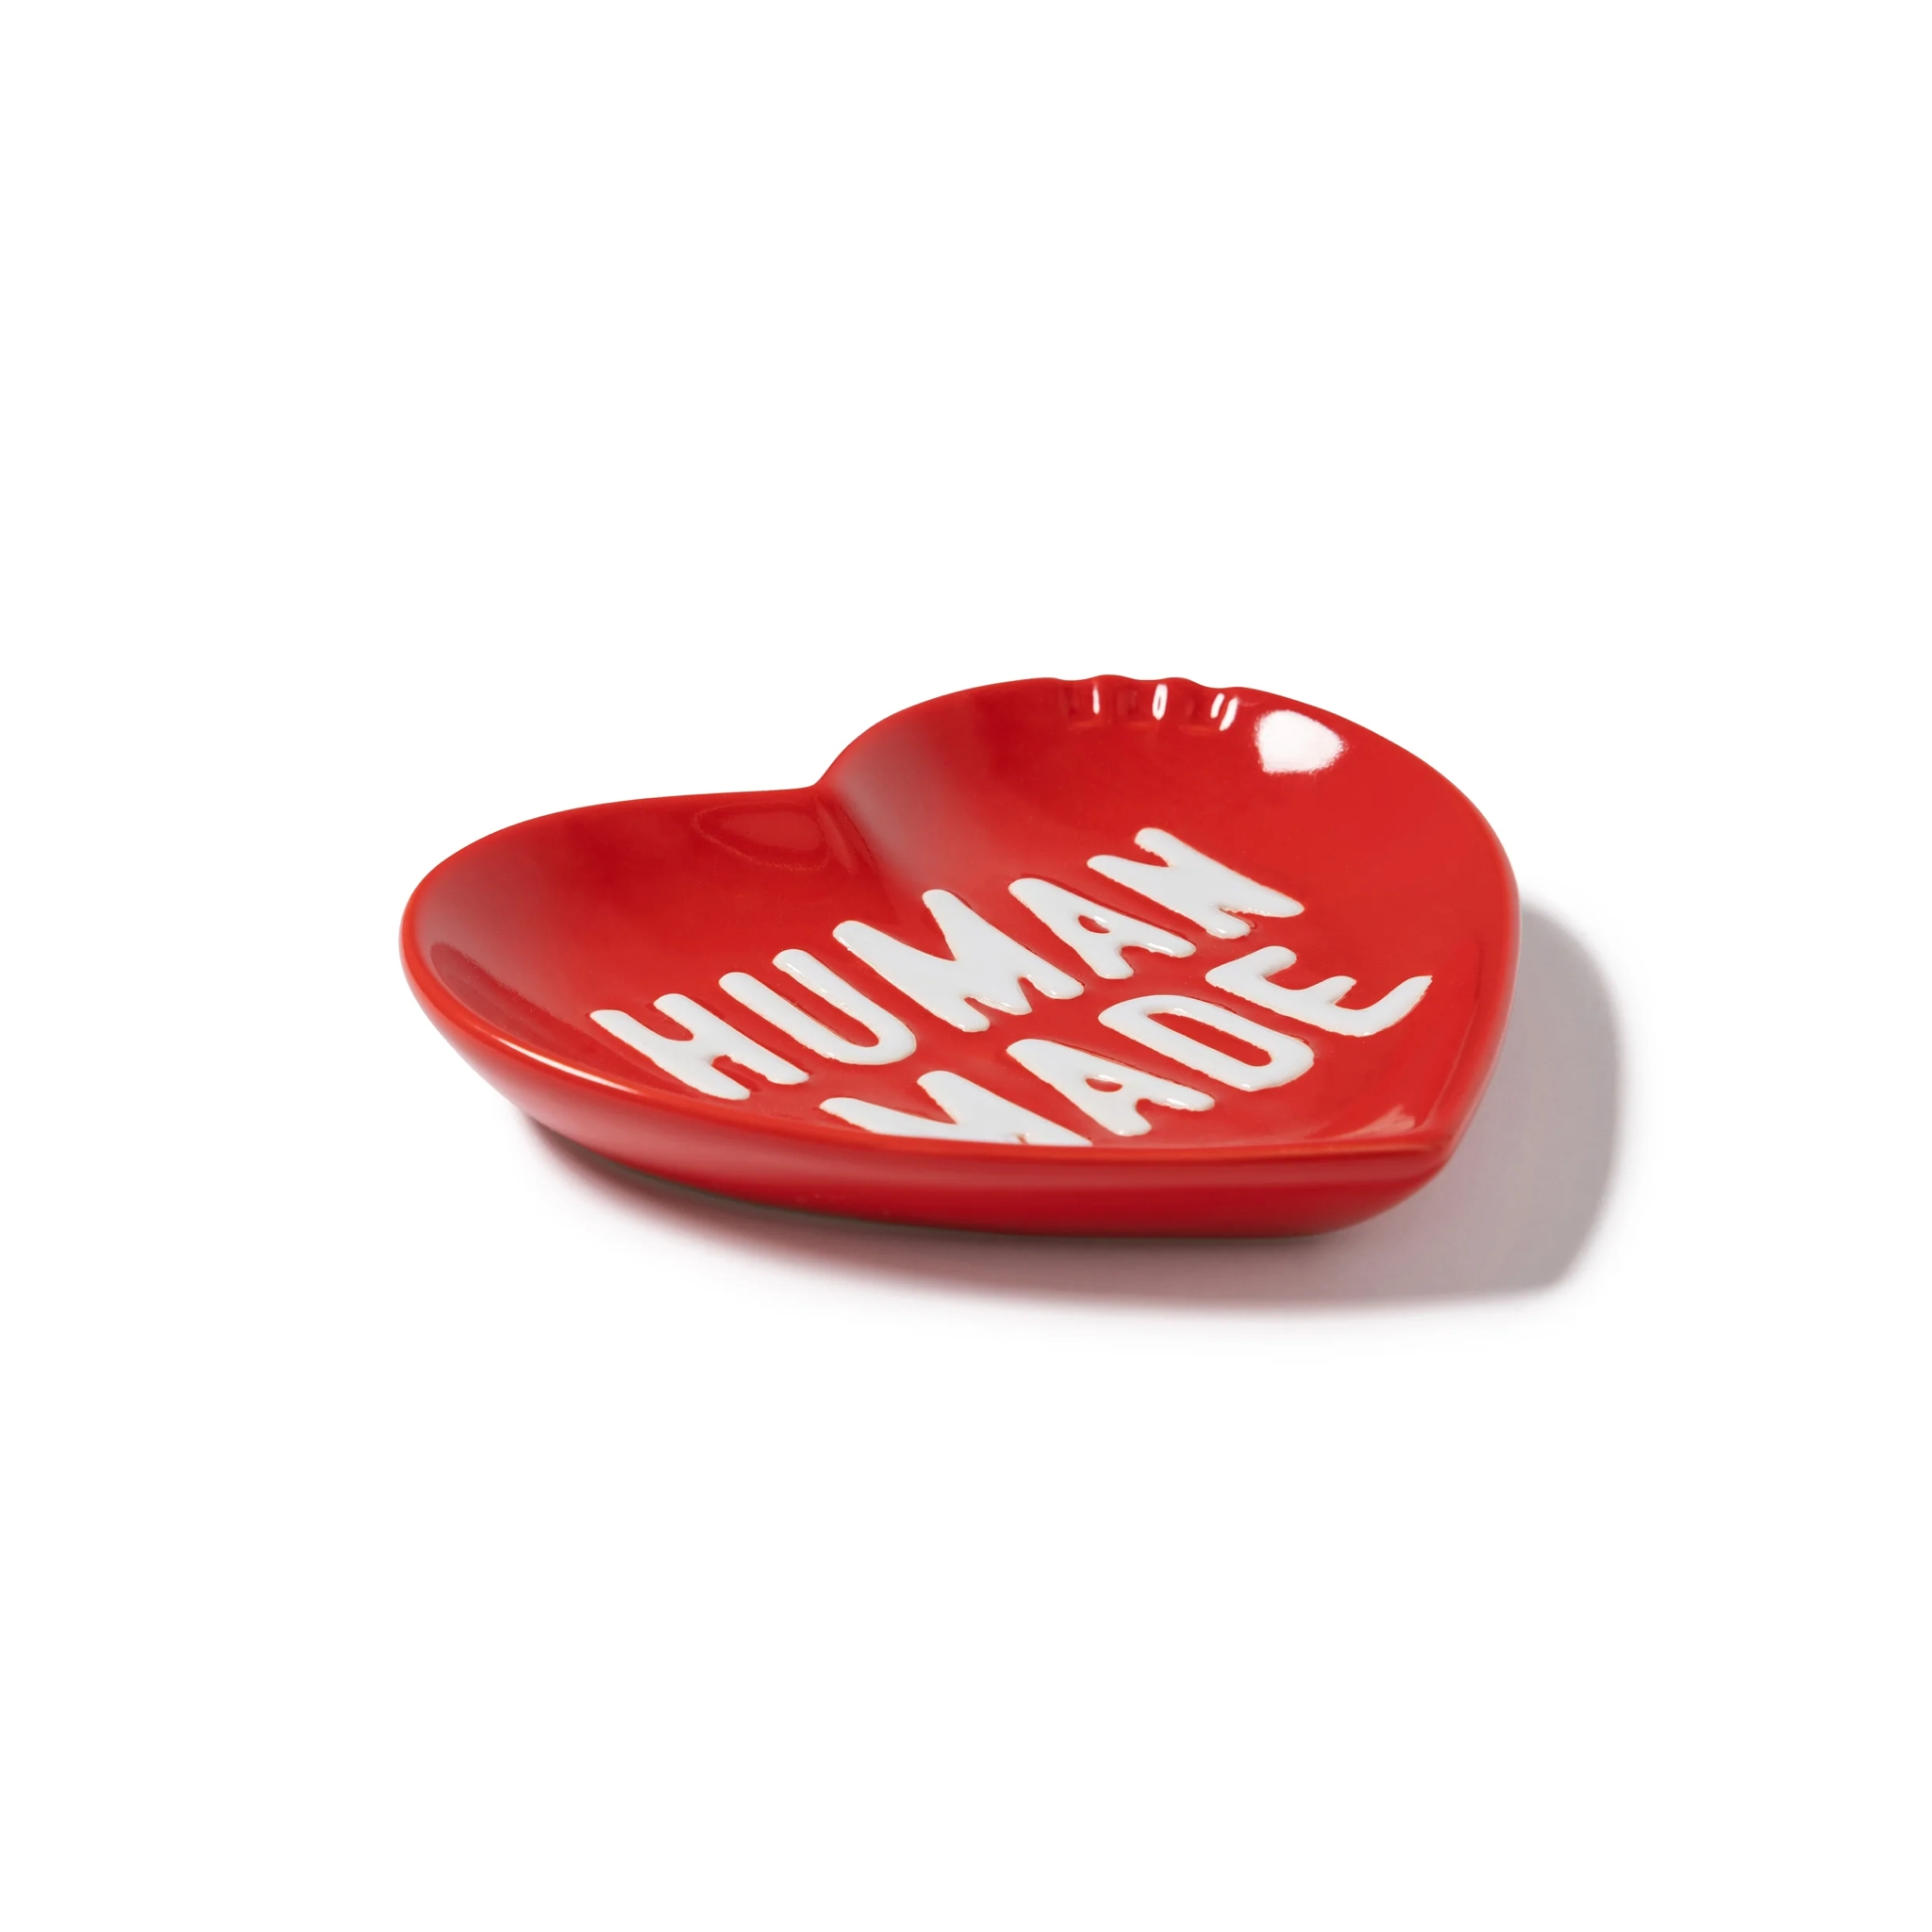 HUMAN MADE HEART CERAMICS TRAY NAVY BLUE - コインケース